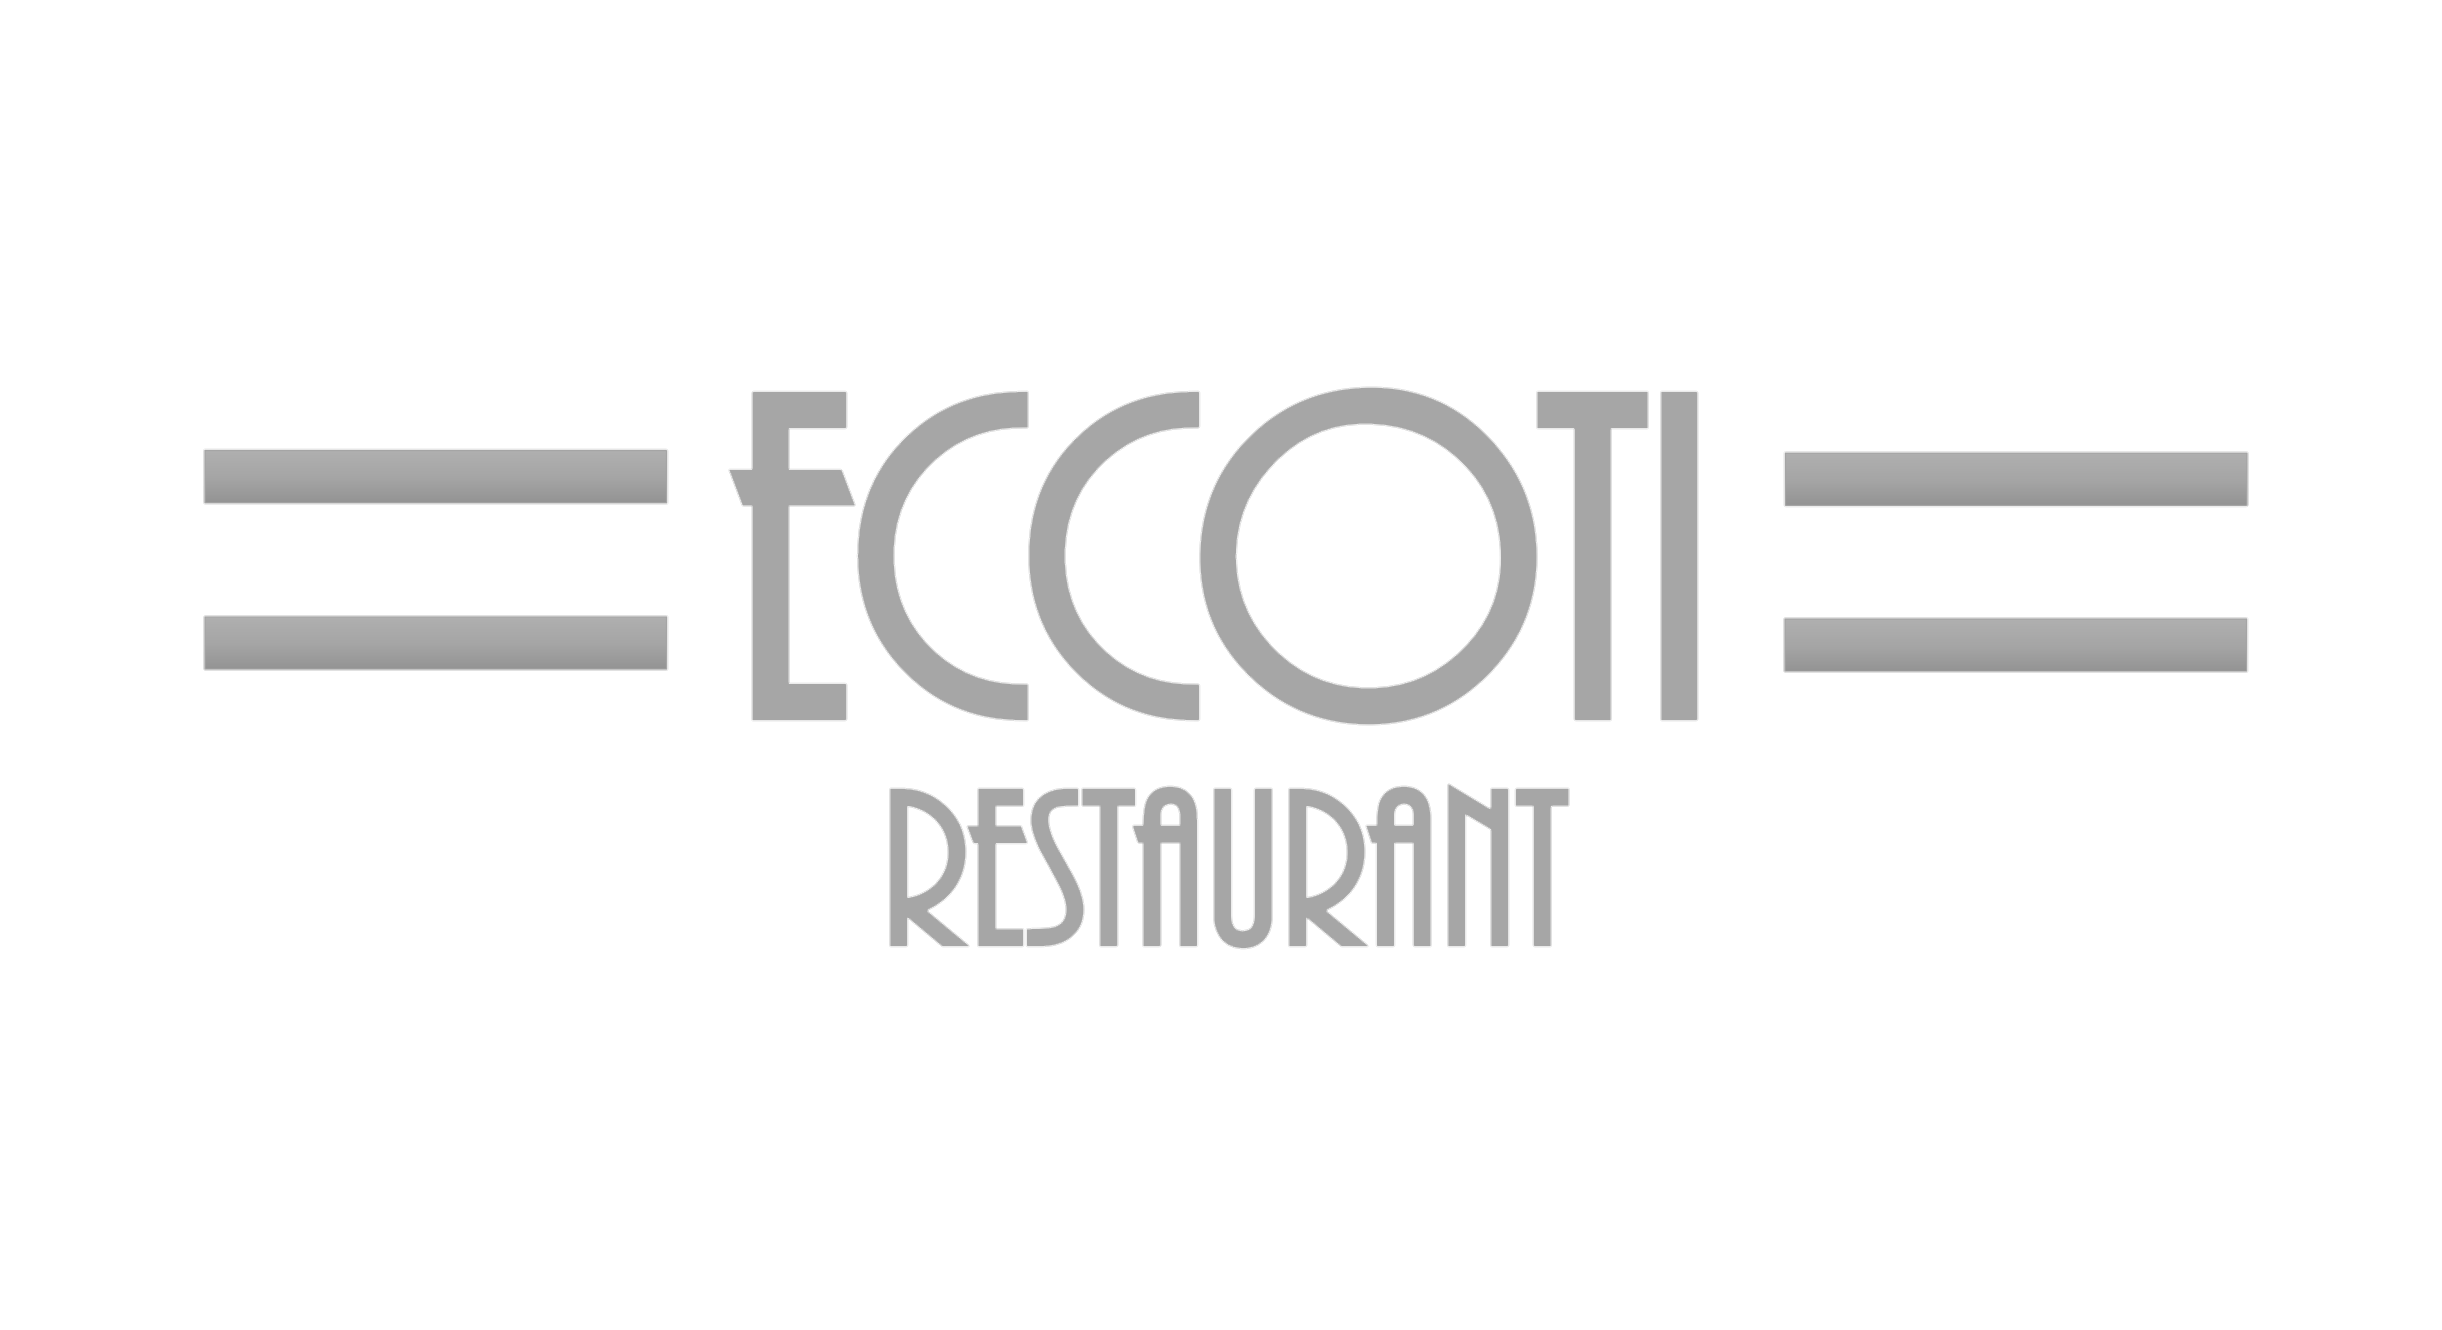 Eccoti Restaurant - Homepage